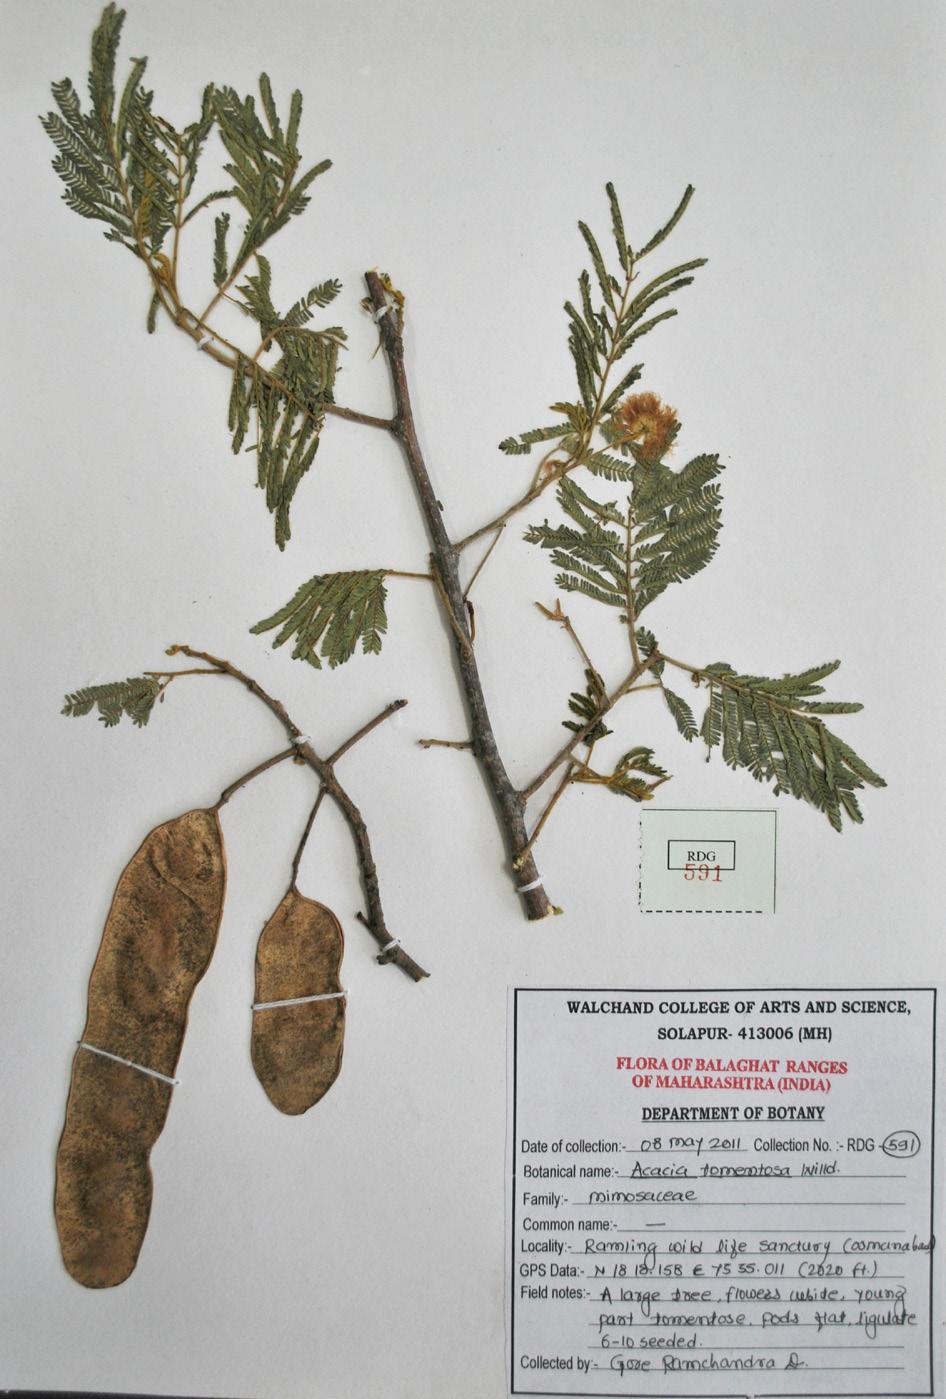 1806 (Mimosaceae) (Images 5,6) Specimen examined: RDG 591 (Walchand College, Herbarium), 08.v.